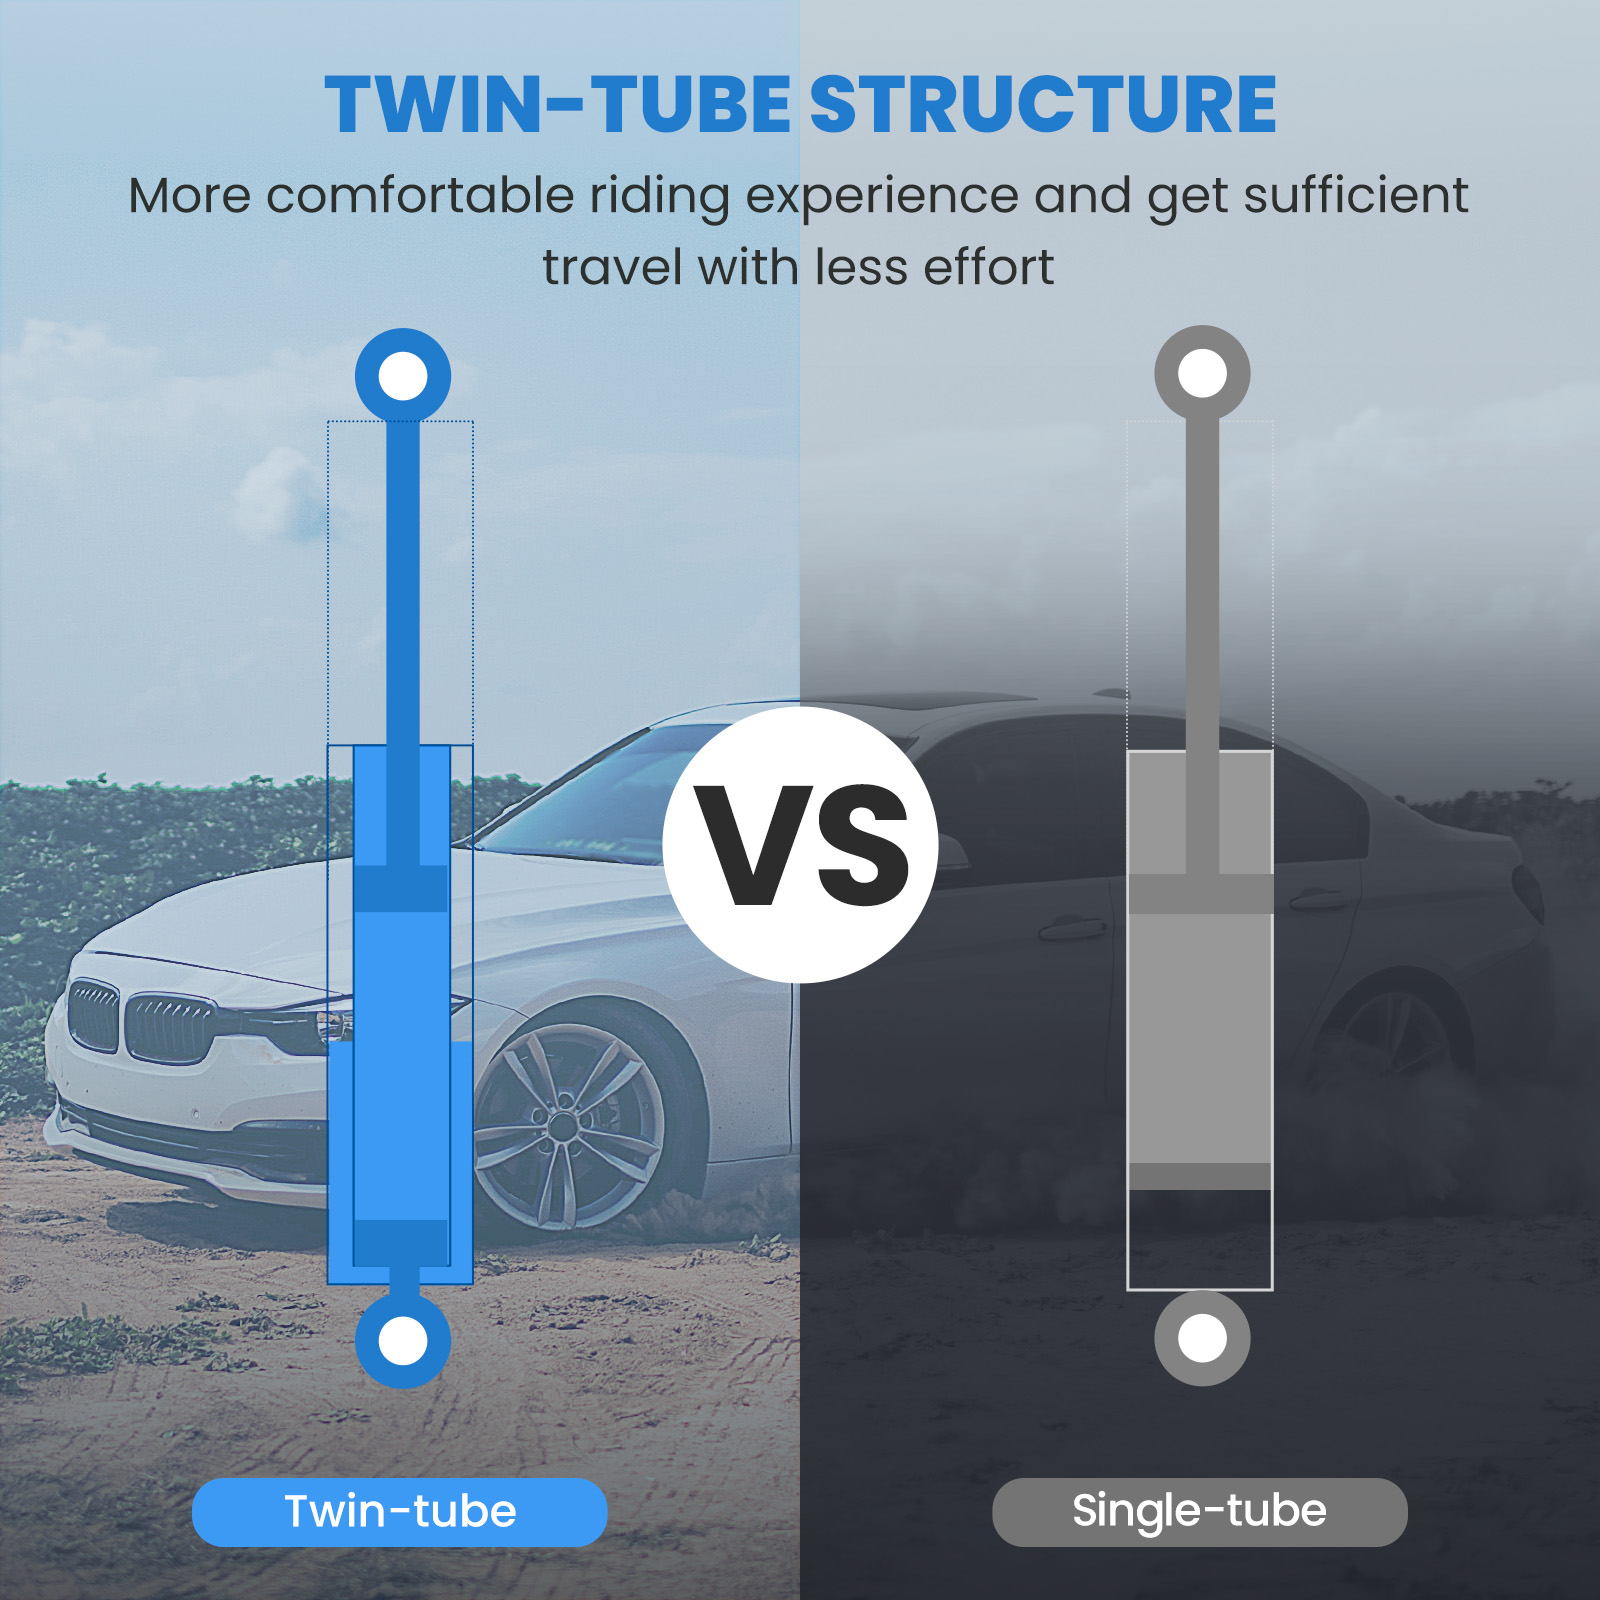 Advanced Twin-Tube Technology